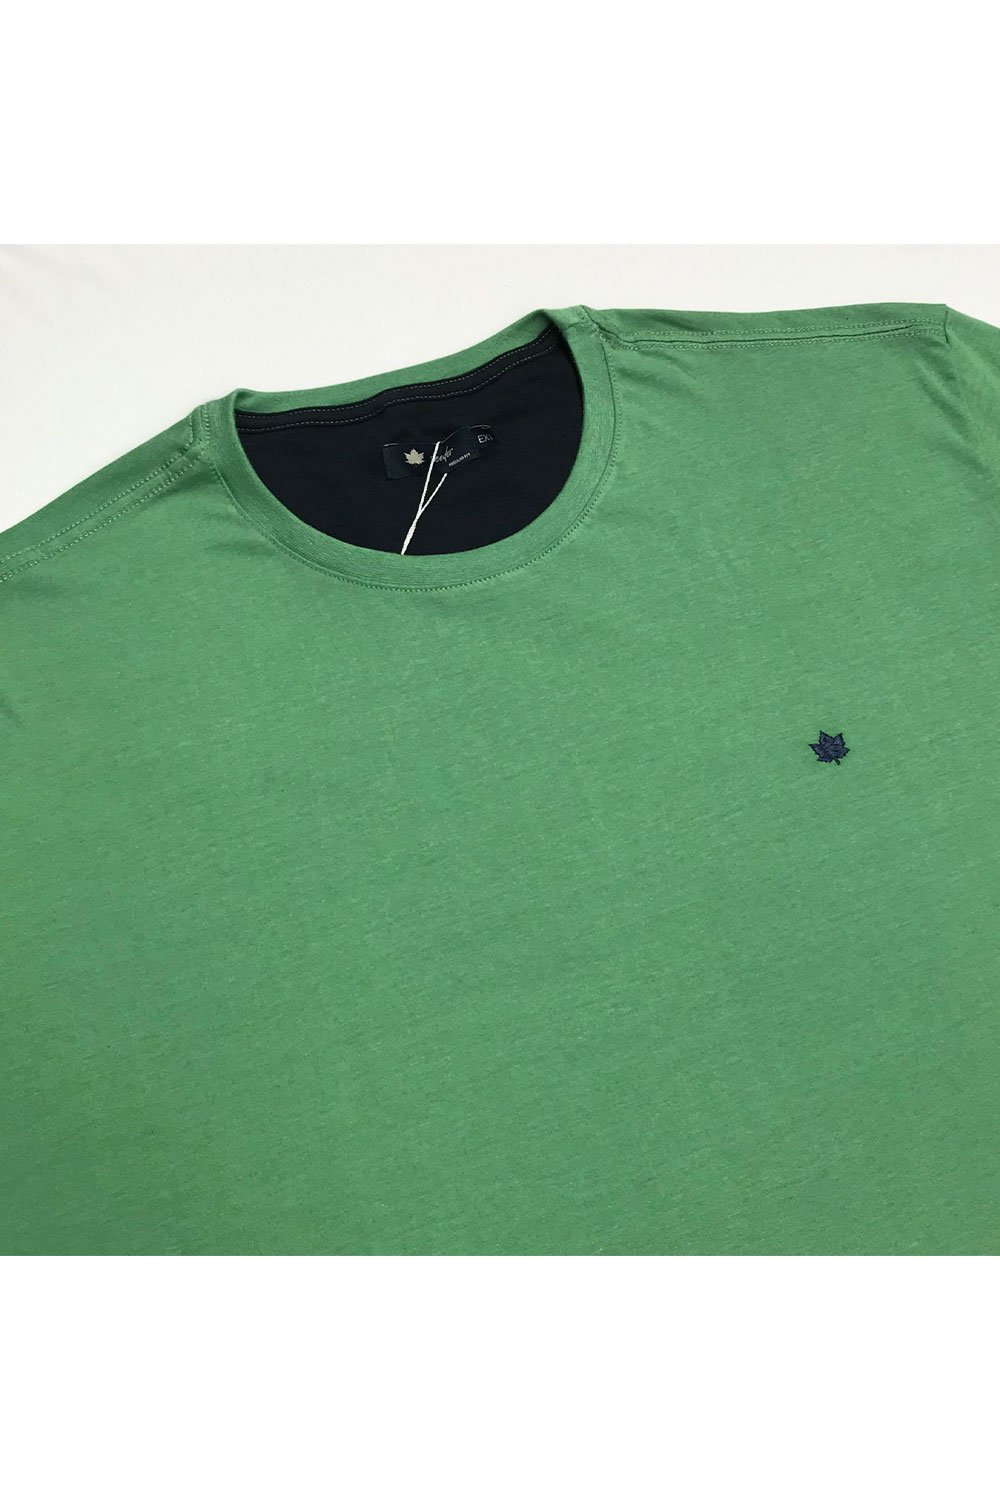 camiseta basica masculina plus size verde jolly se0305009 vd0070 1